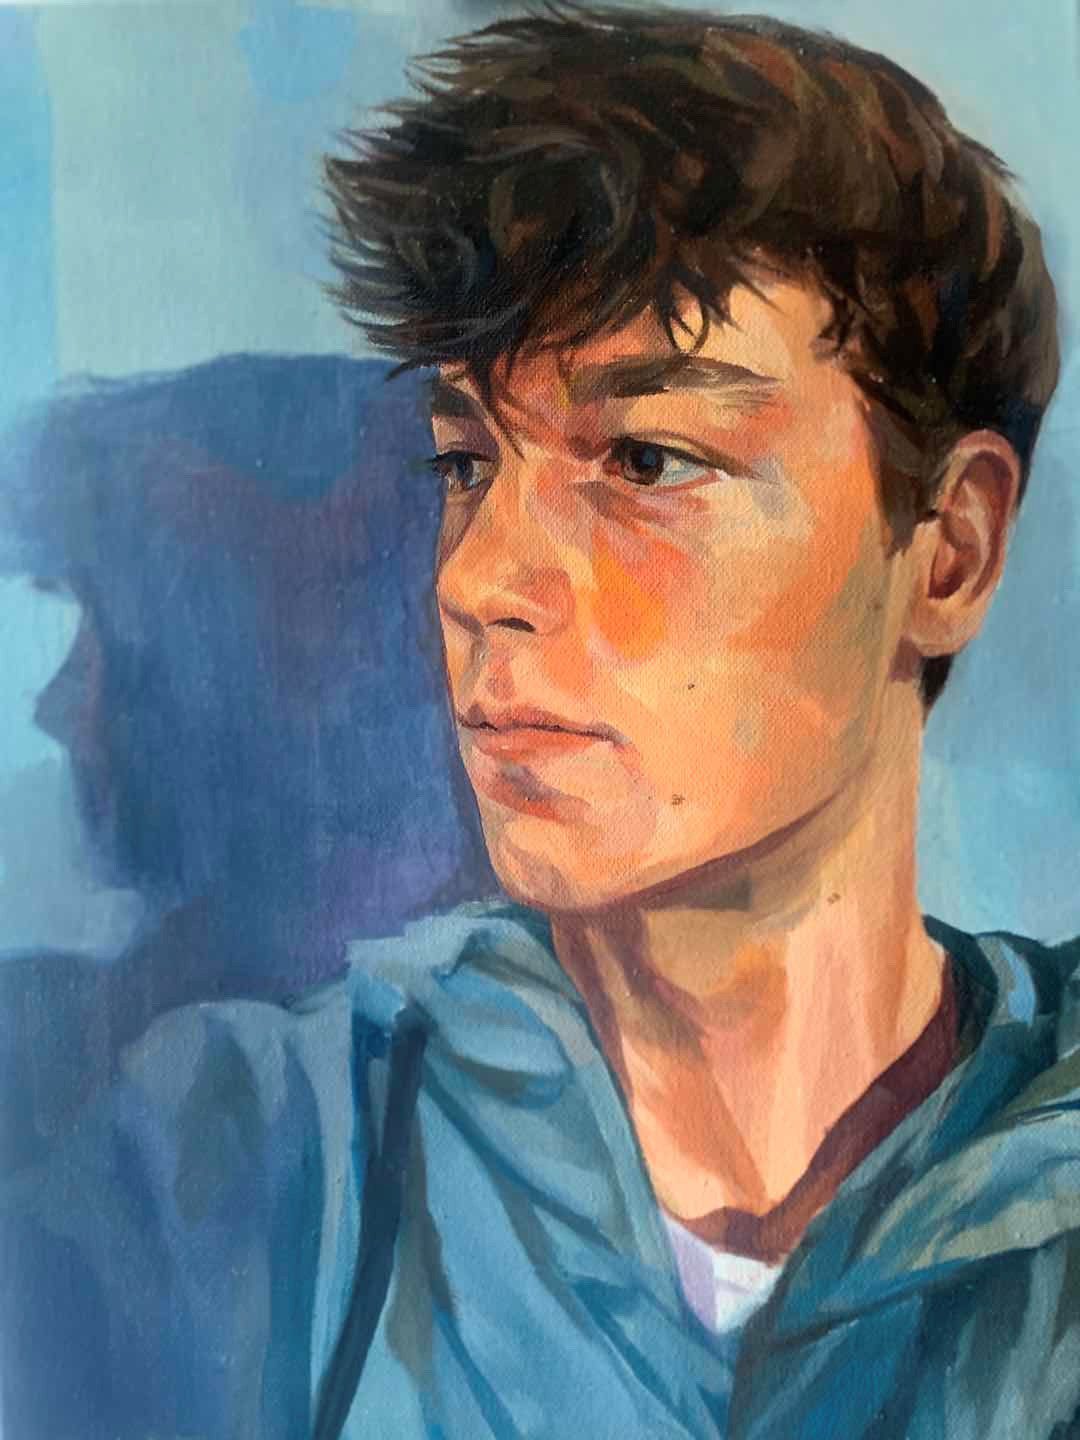 The Boy In Boy by Rachel Chen - Texaco Art Comp 2020